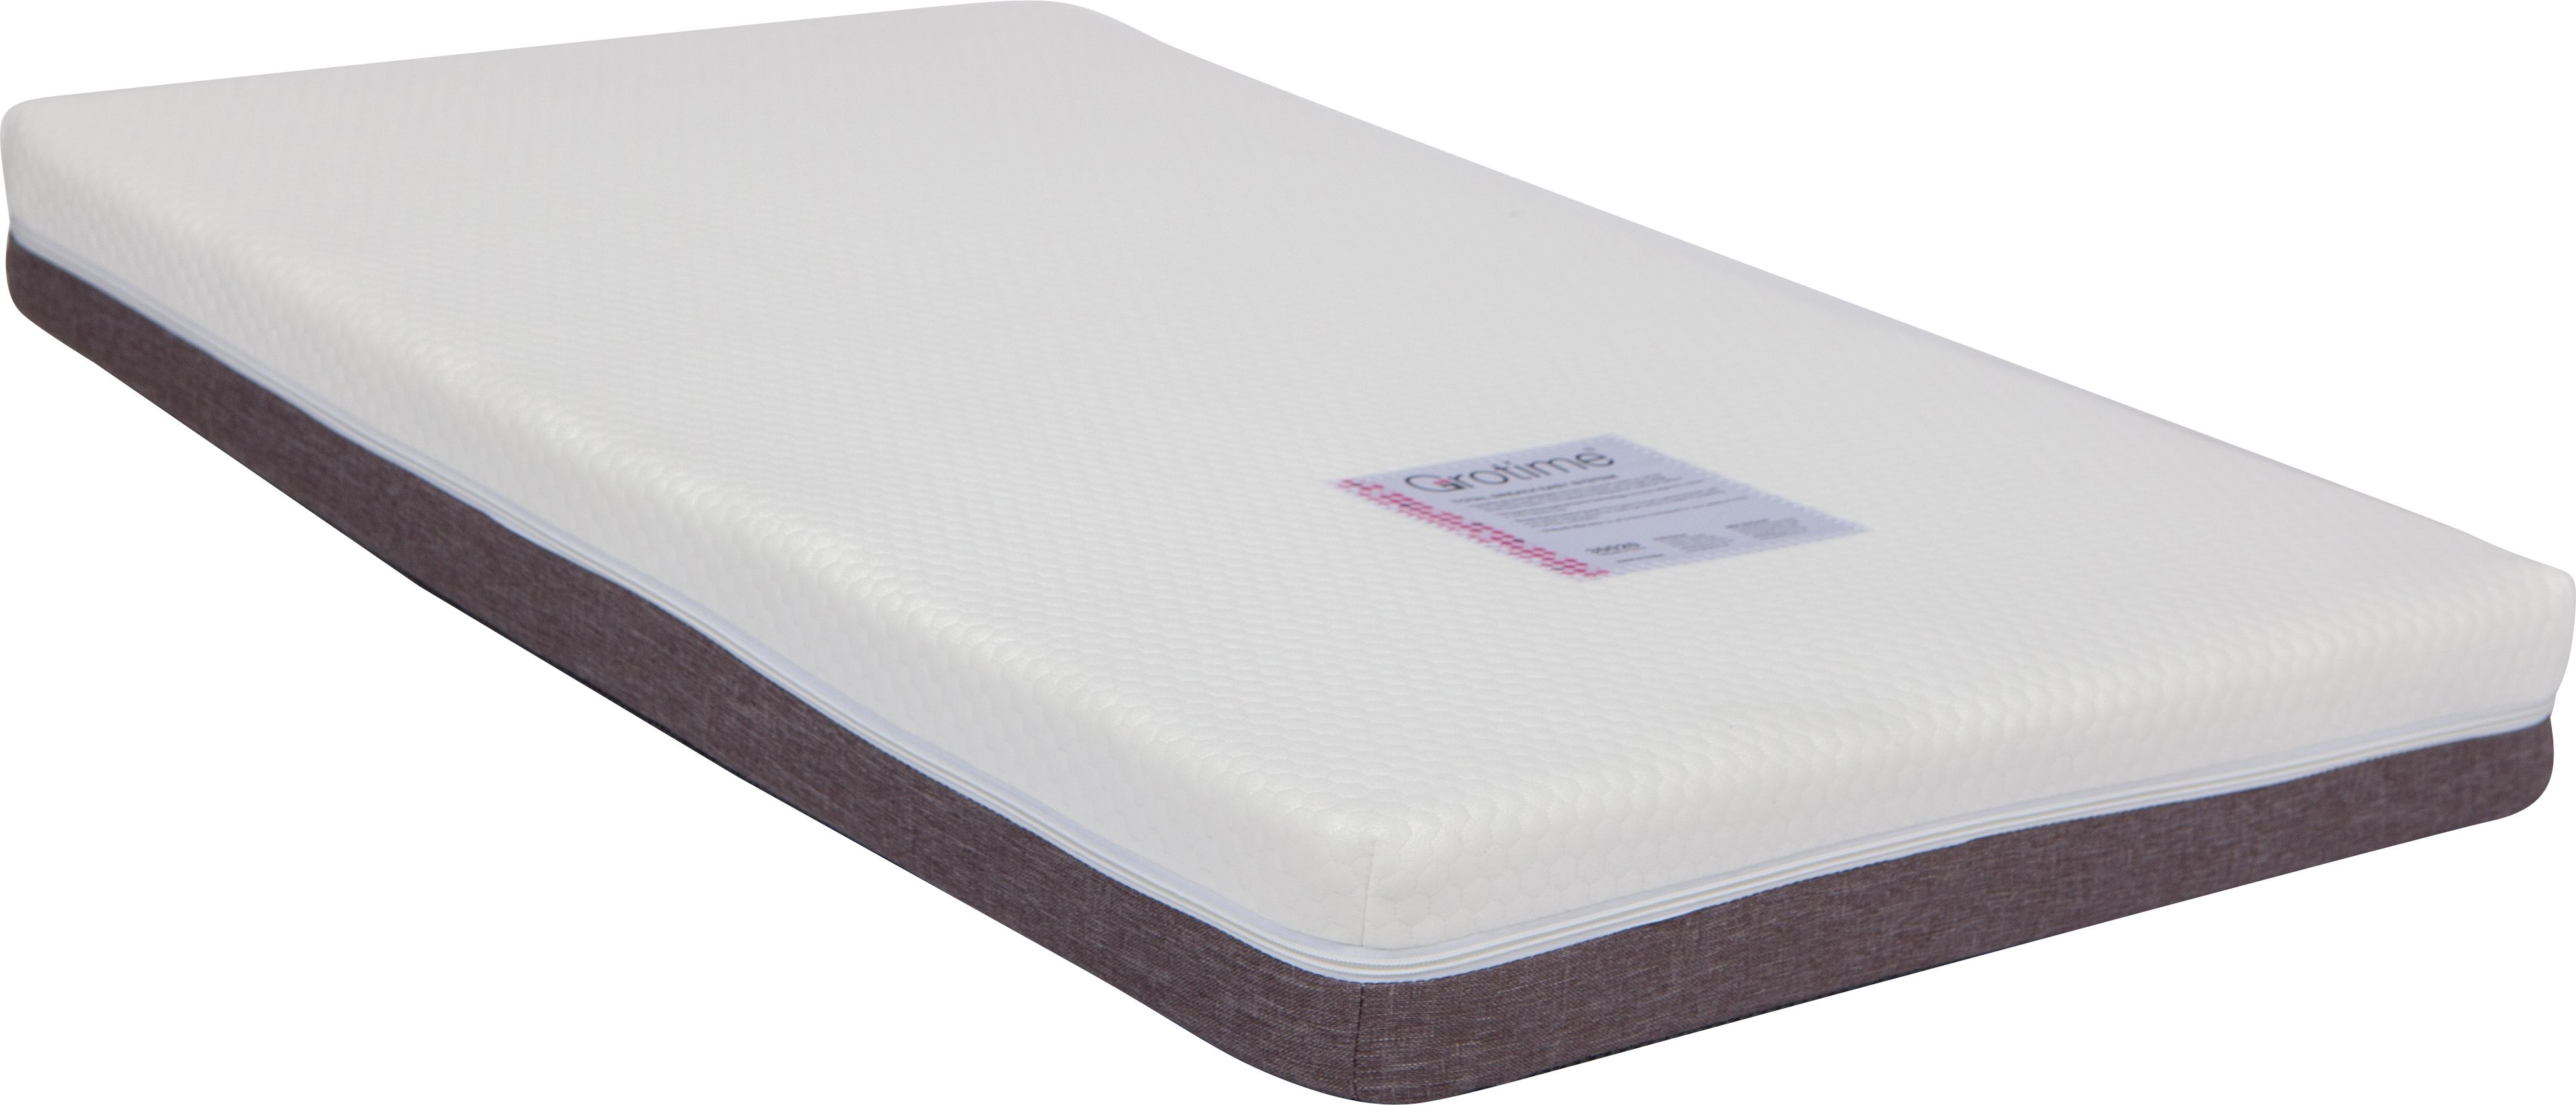 grotime 6 in 1 mattress size